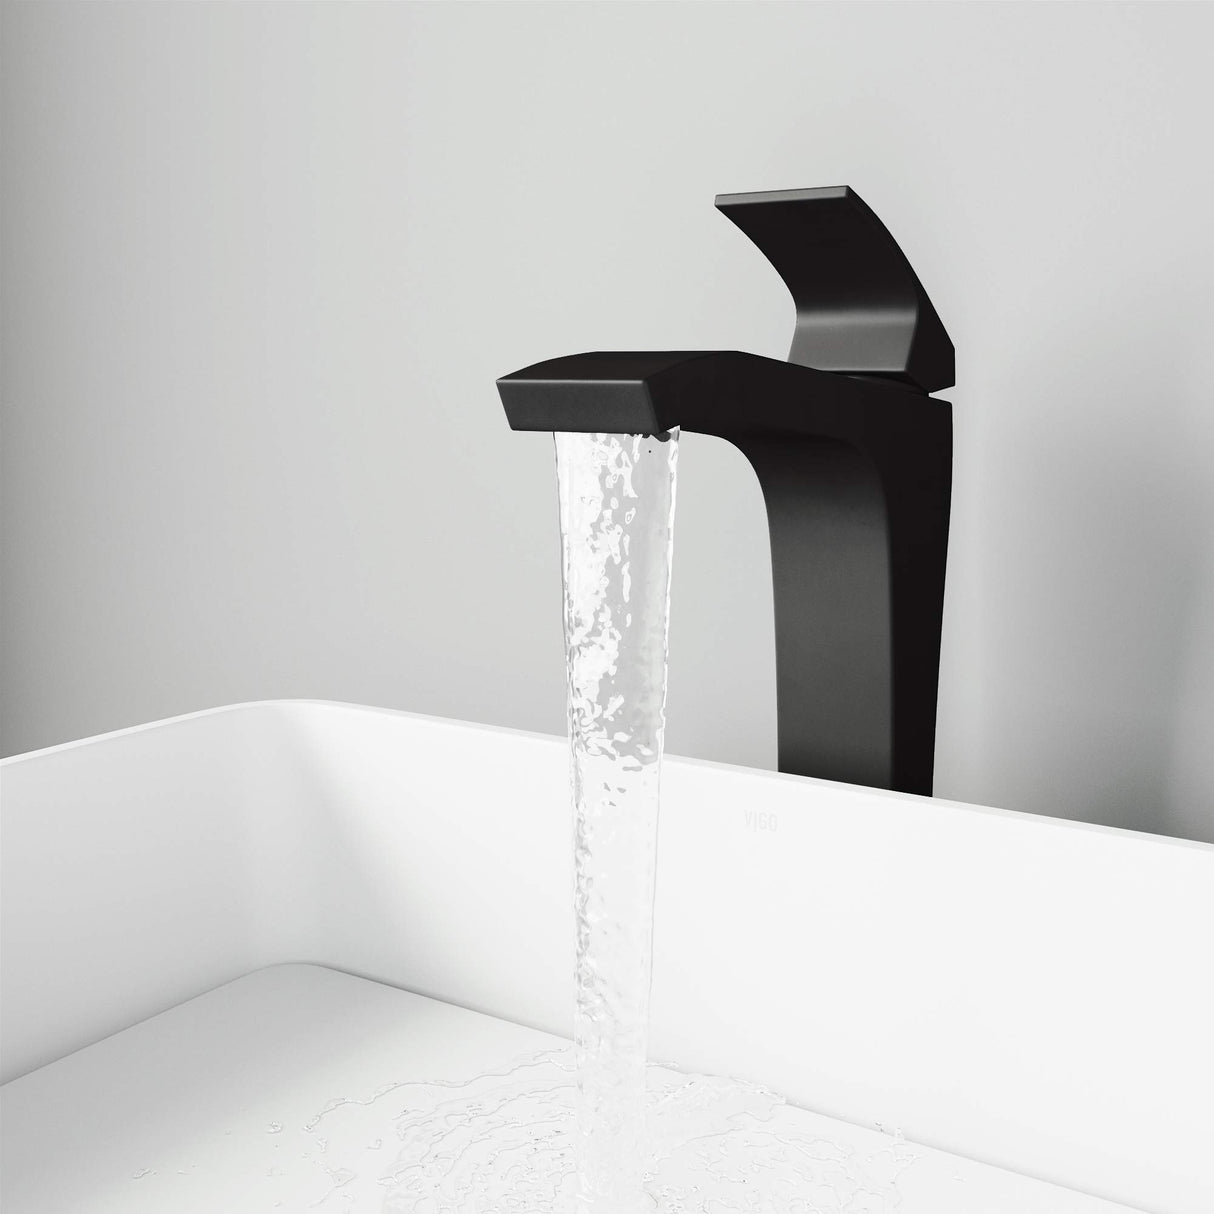 VIGO Blackstonian 11.625 inch H Single Hole Single Handle Bathroom Faucet in Matte Black - Vessel Sink Faucet VG03018MB